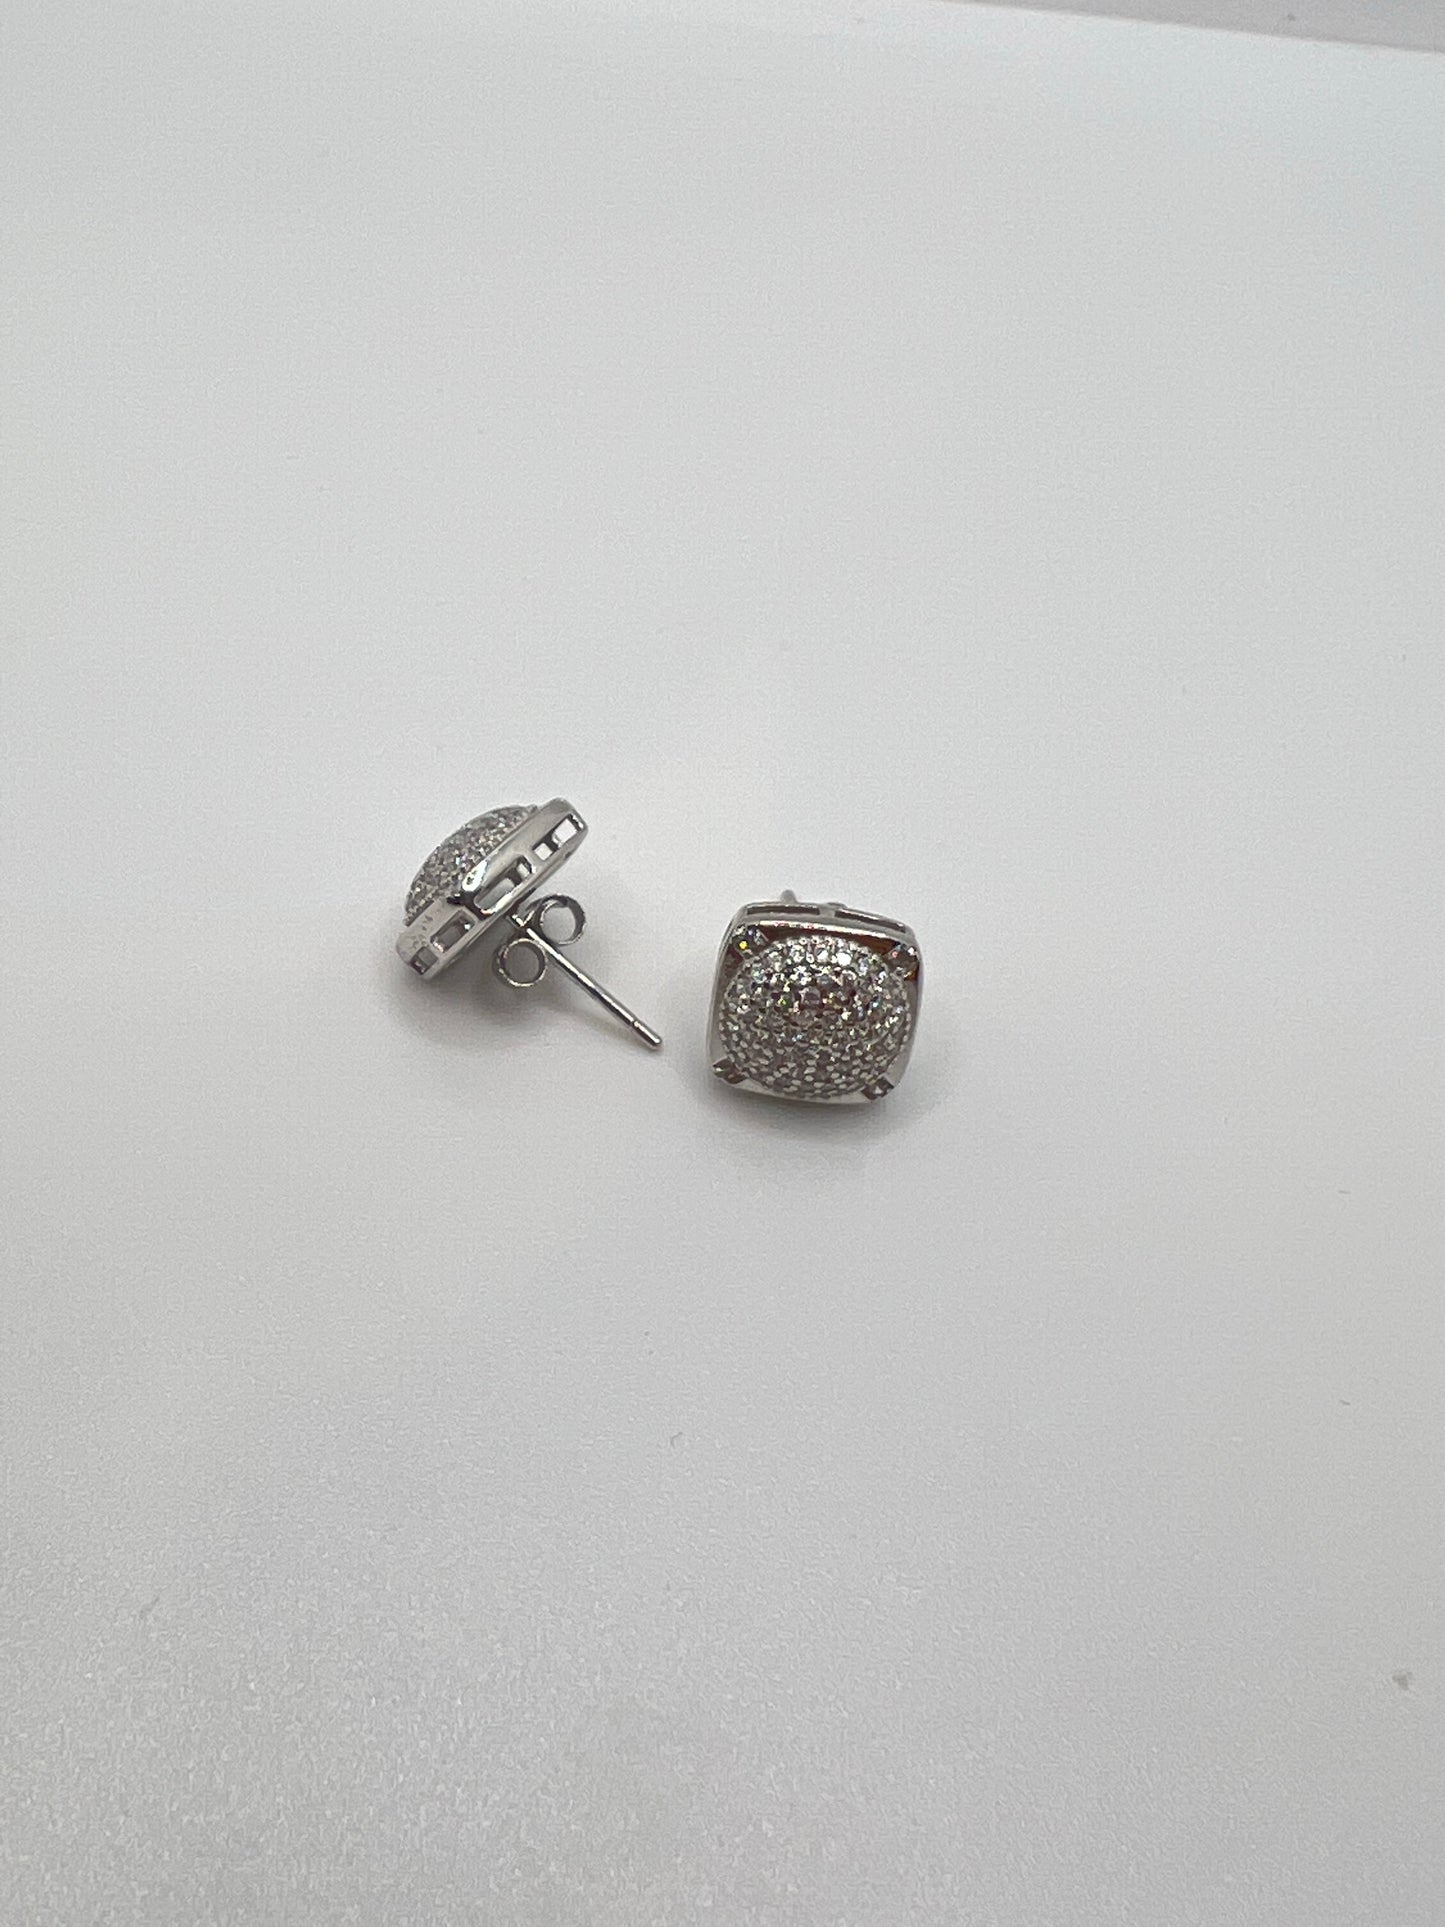 925 Sterling silver Stud earrings